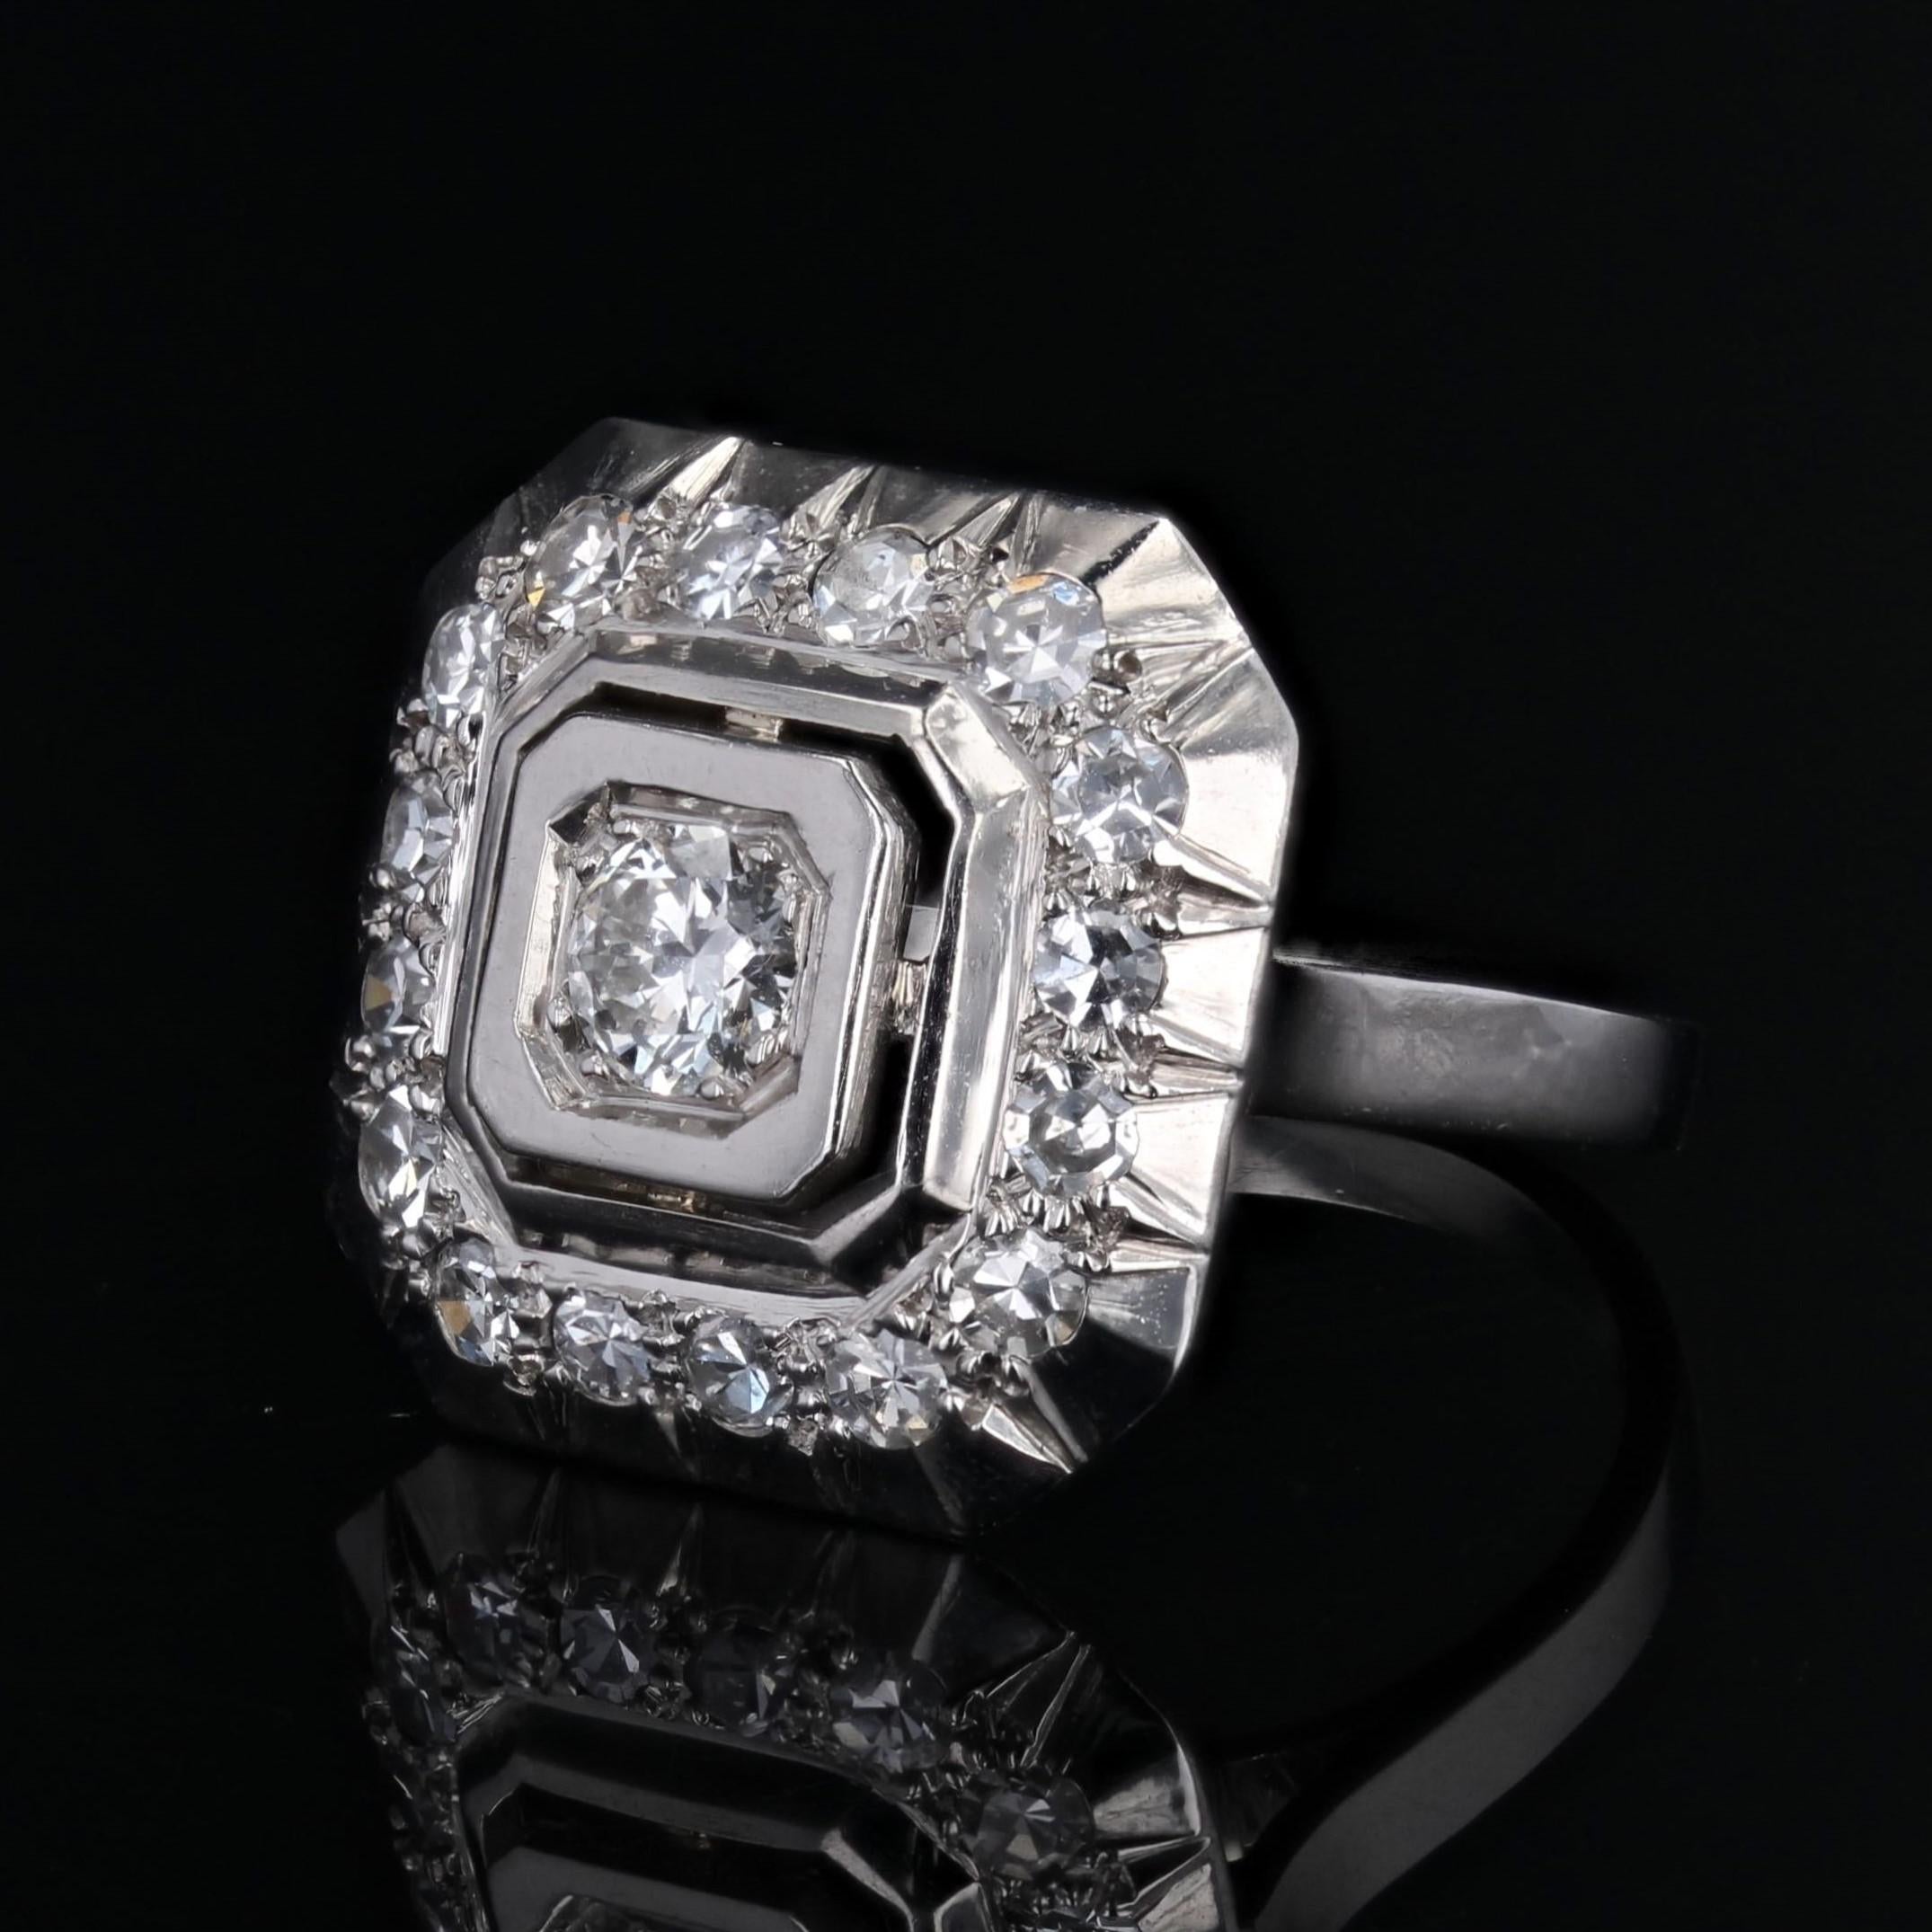 1930s Art Deco 18 Karat White Gold Diamond Squarred Ring For Sale 2